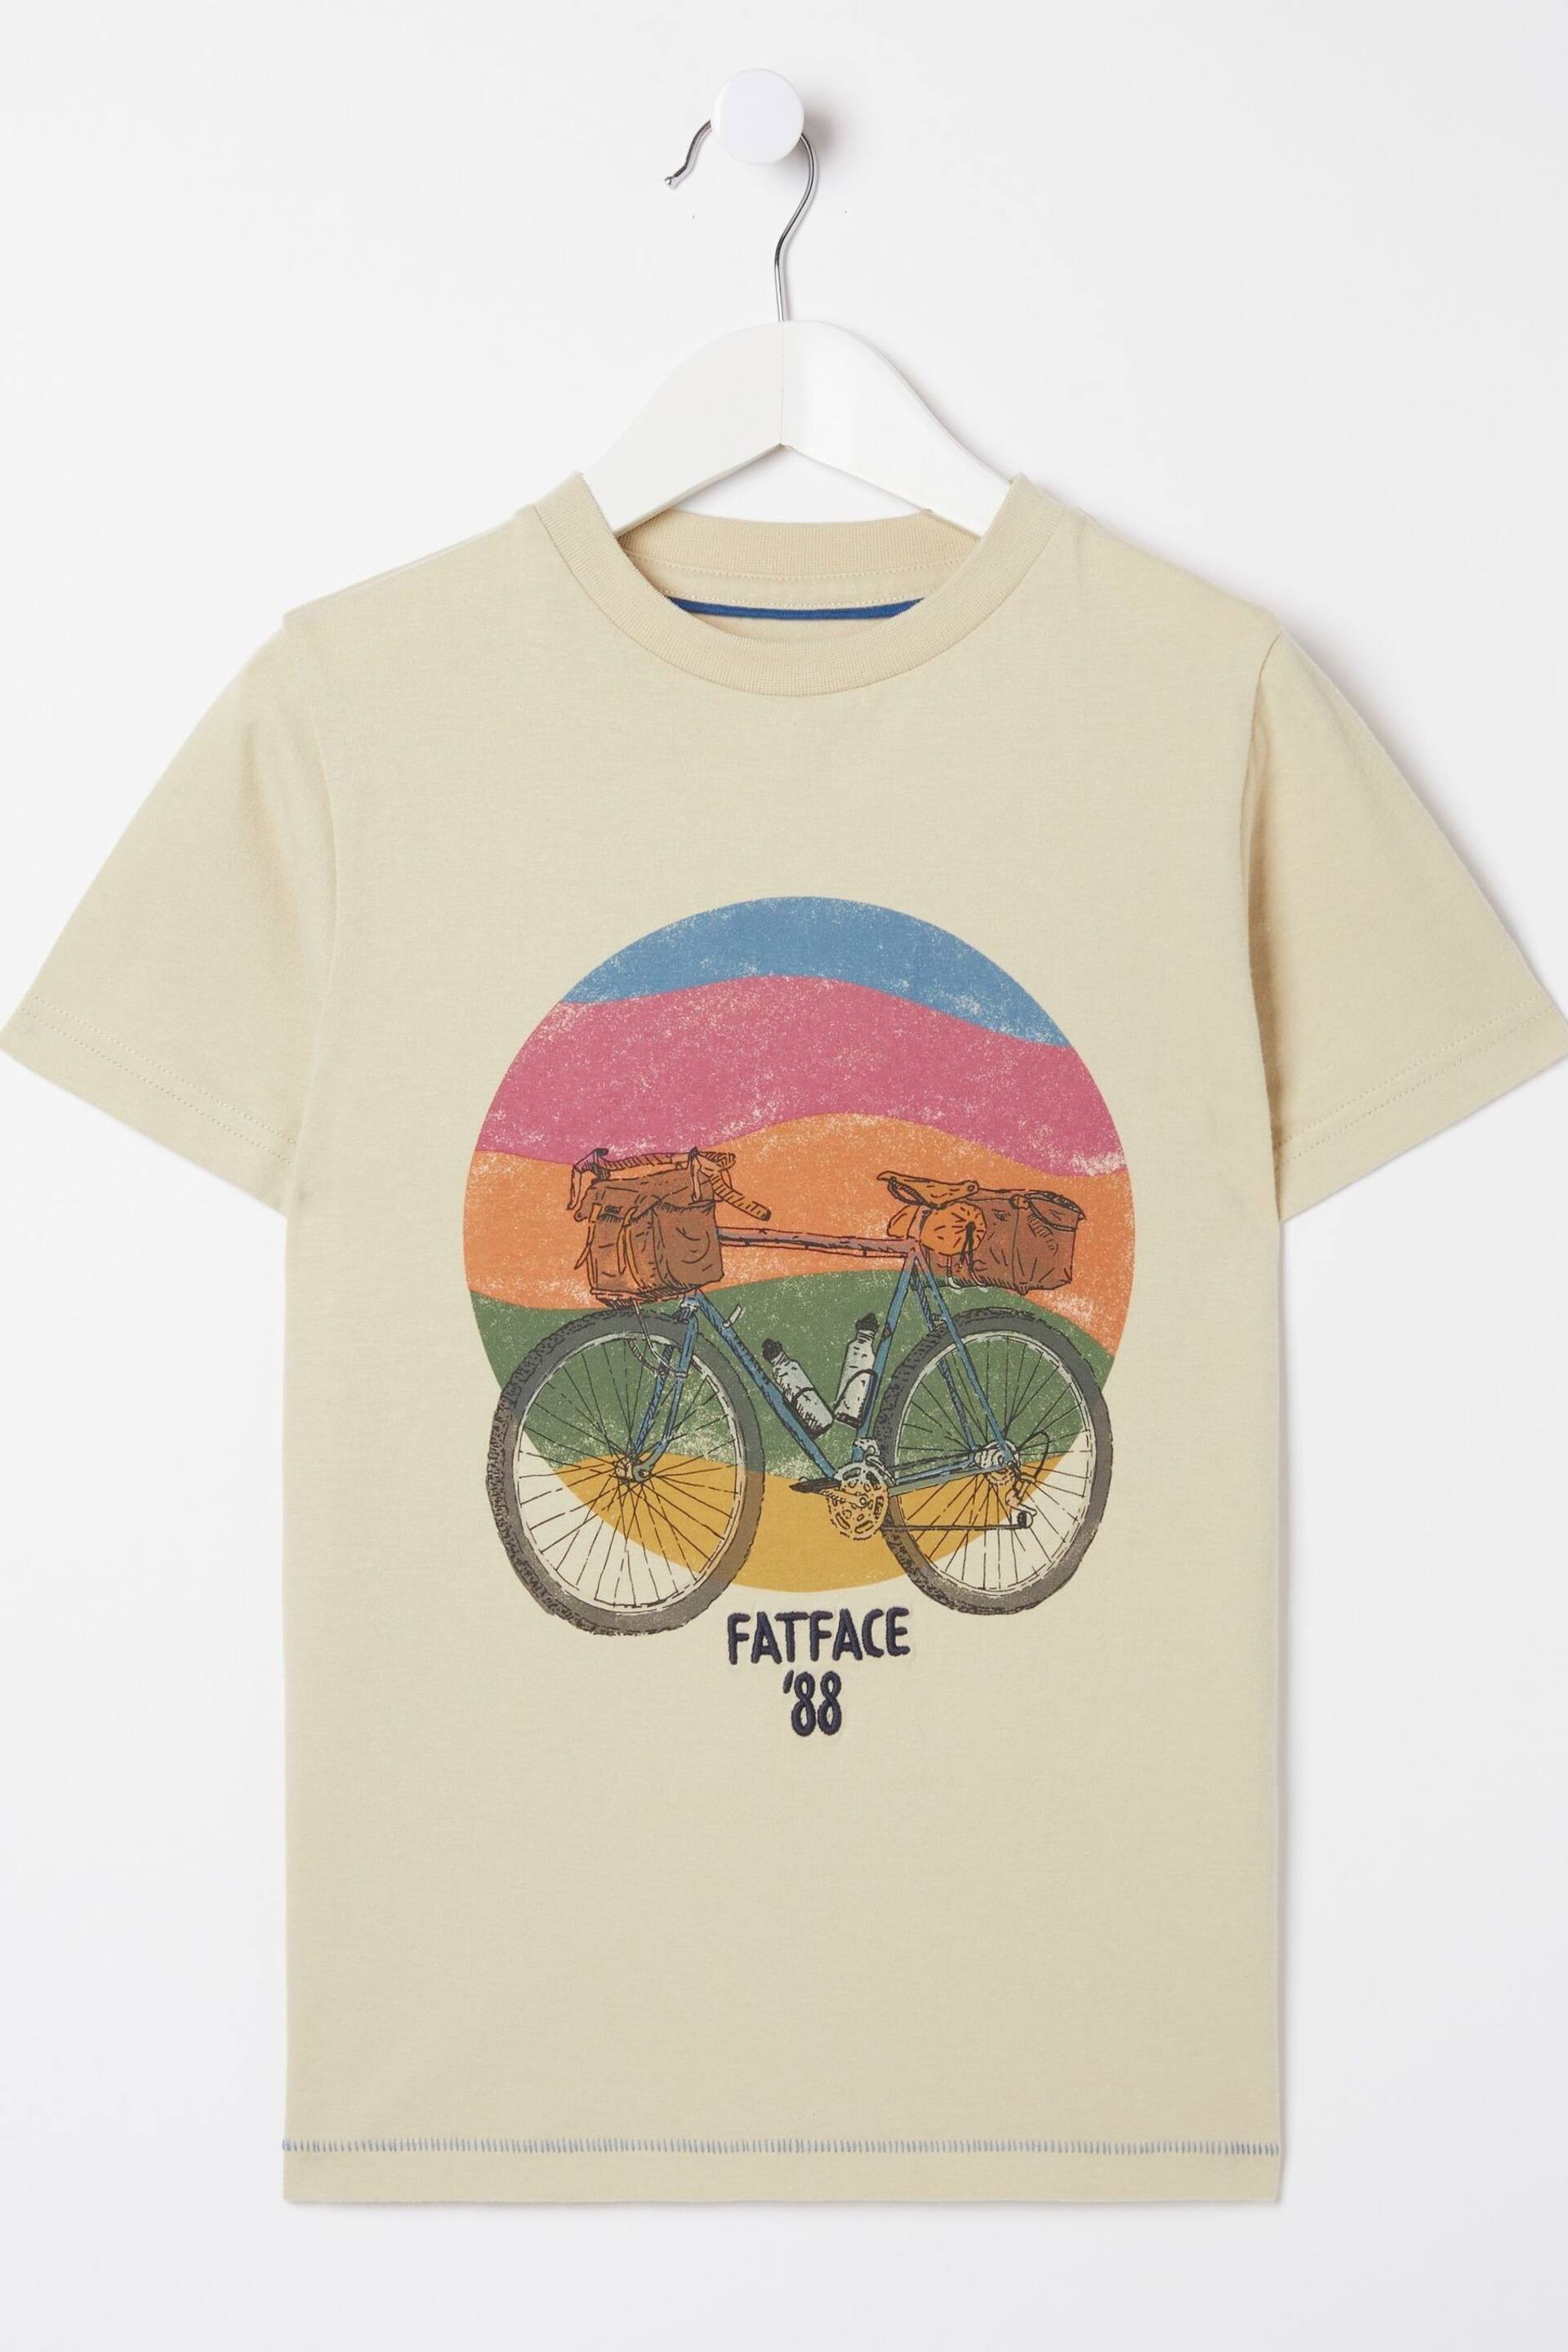 FatFace Natural Bike Sunset Jersey T-Shirt - Image 4 of 4